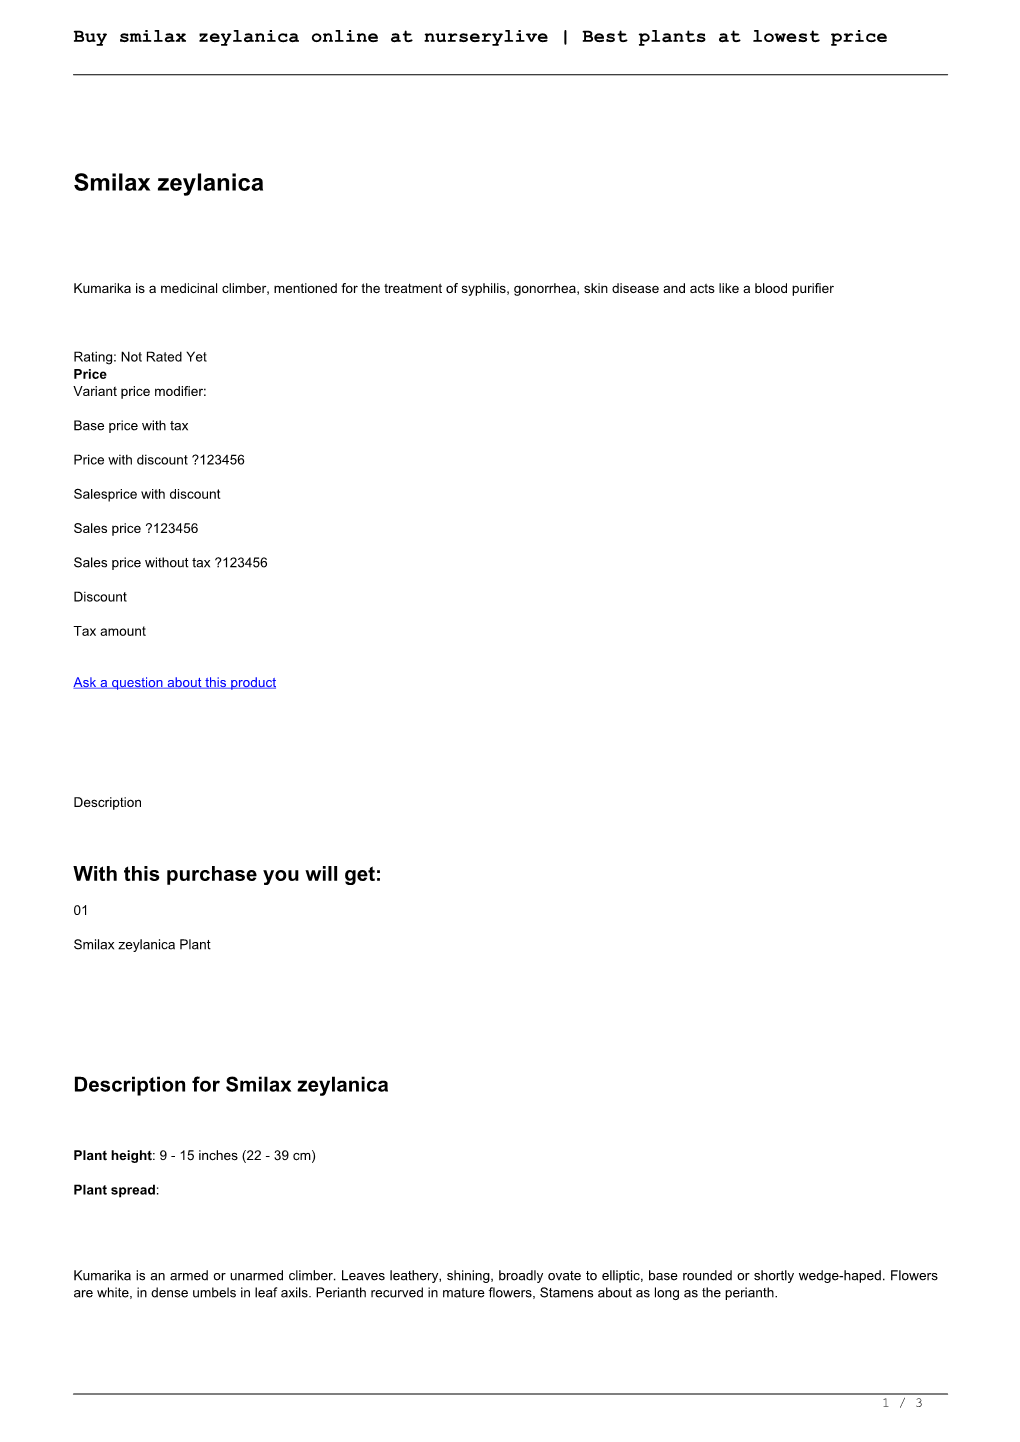 Buy Smilax Zeylanica Online at Nurserylive | Best Plants at Lowest Price